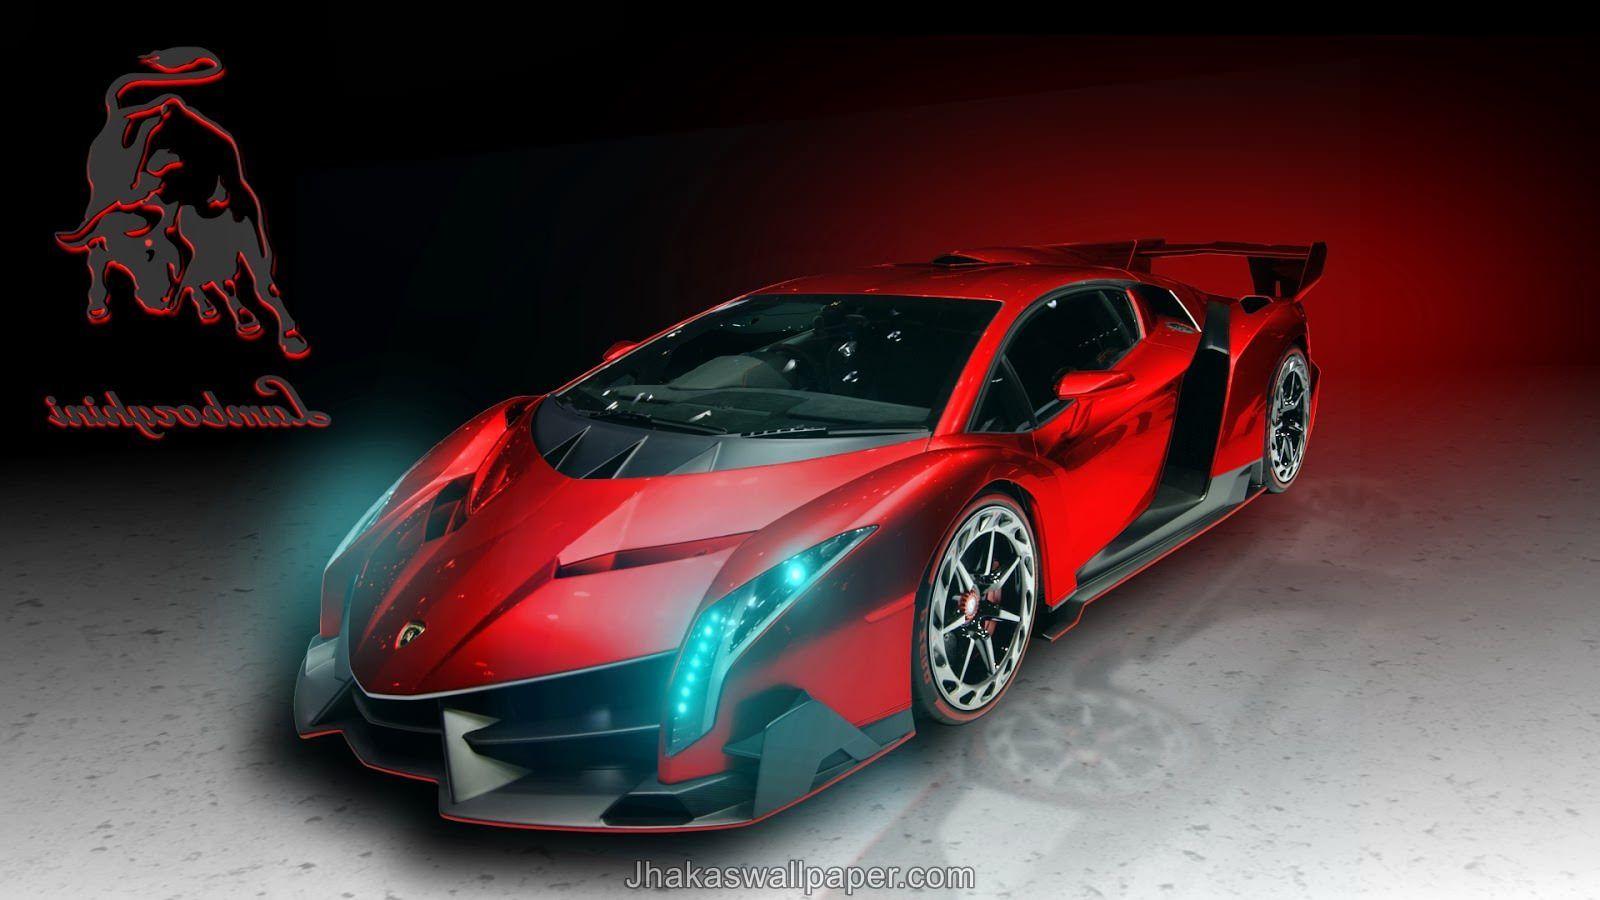 Neon Lamborghini Wallpapers - Top Free Neon Lamborghini ...